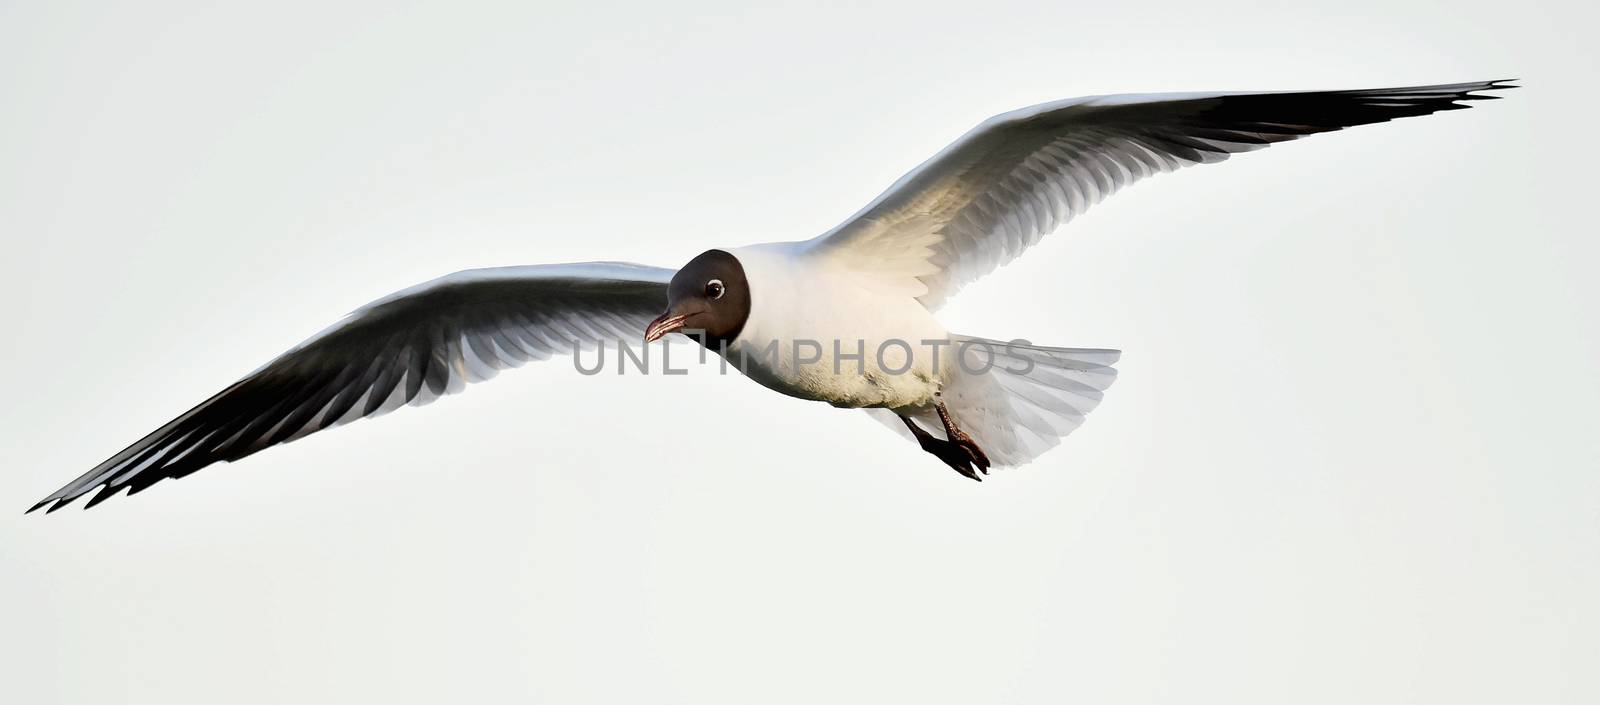 Black-headed Gull (Larus ridibundus) in flight on the sky background